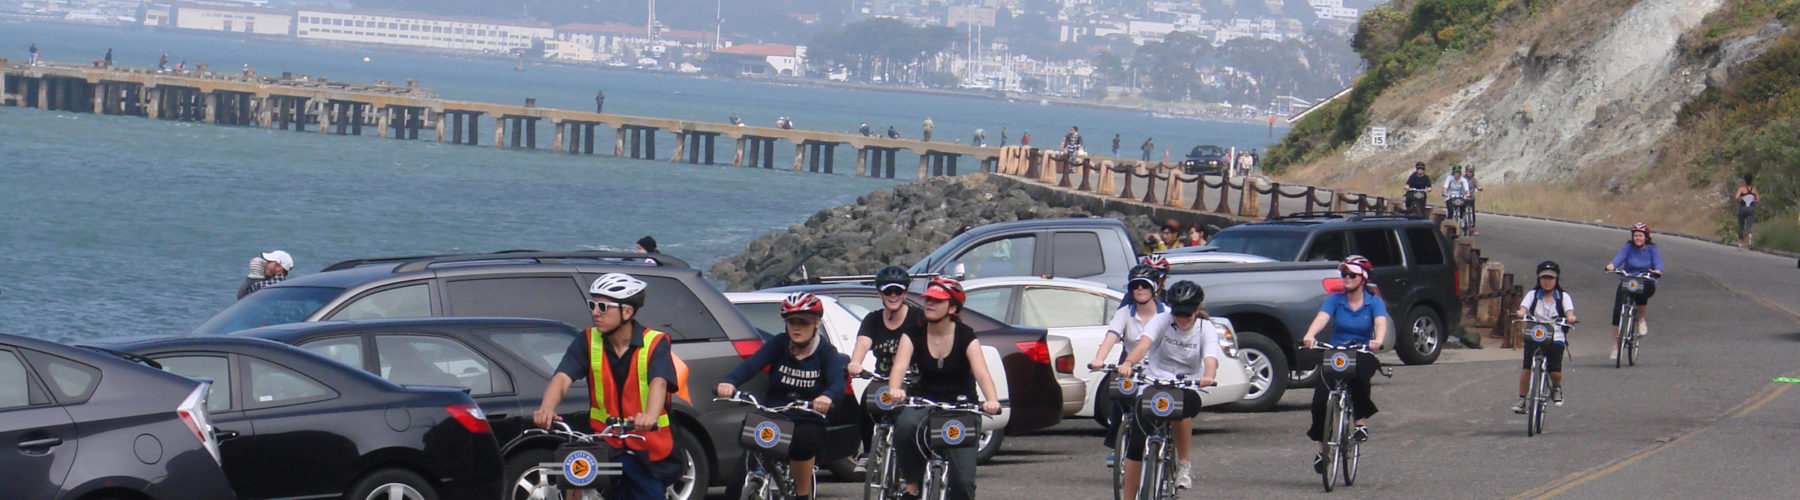 guided san francisco bike tour